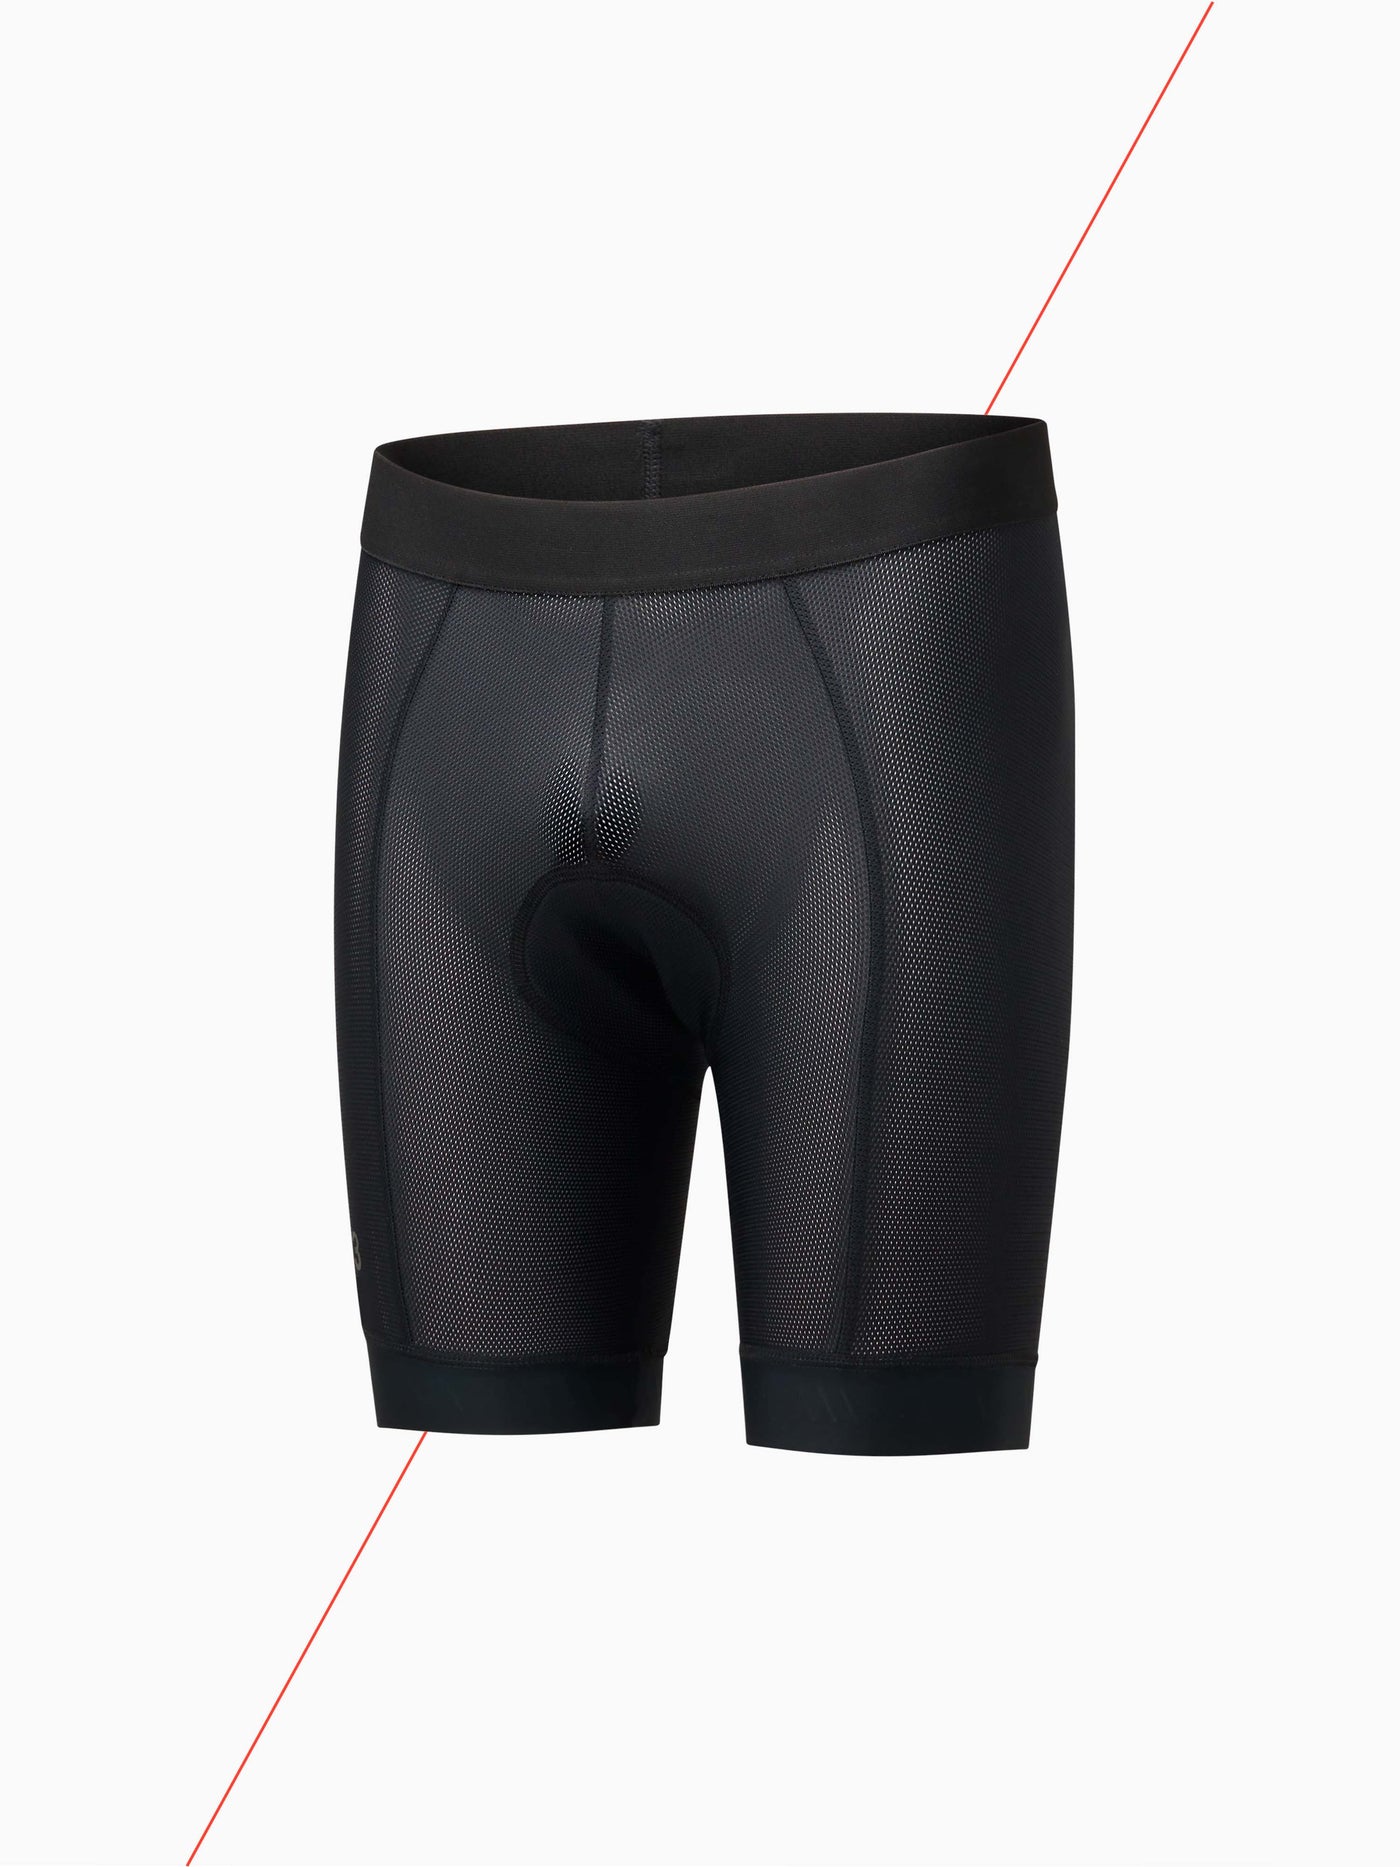 Men's Most Days Tech Liner Shorts